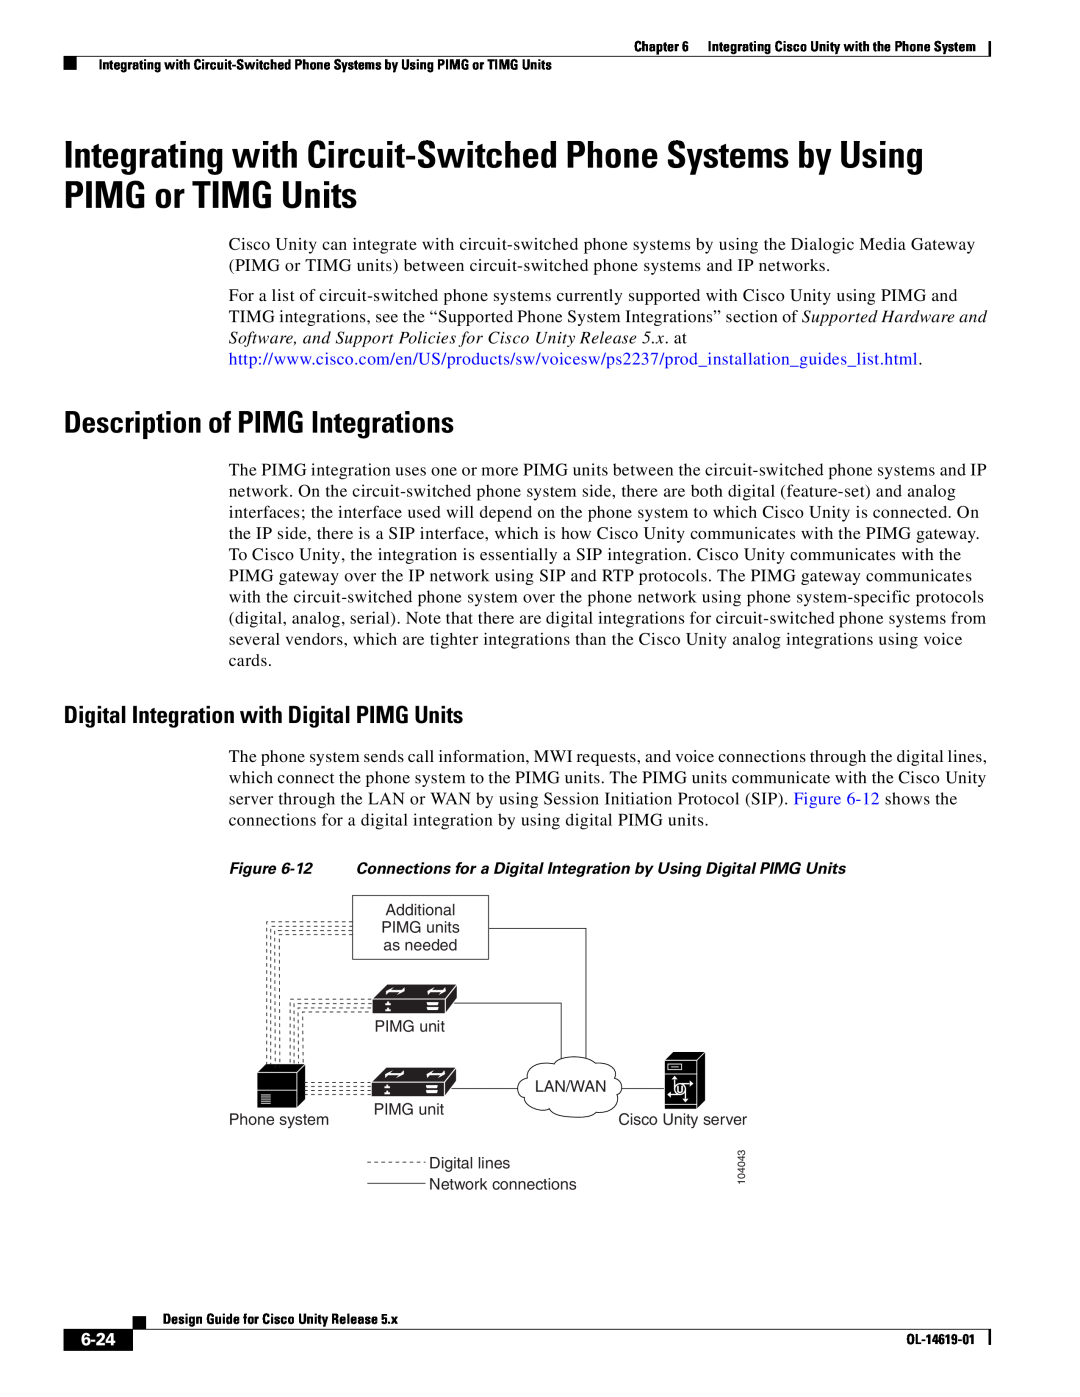 Cisco Systems OL-14619-01 manual Description of PIMG Integrations, 6-24, Digital Integration with Digital PIMG Units 